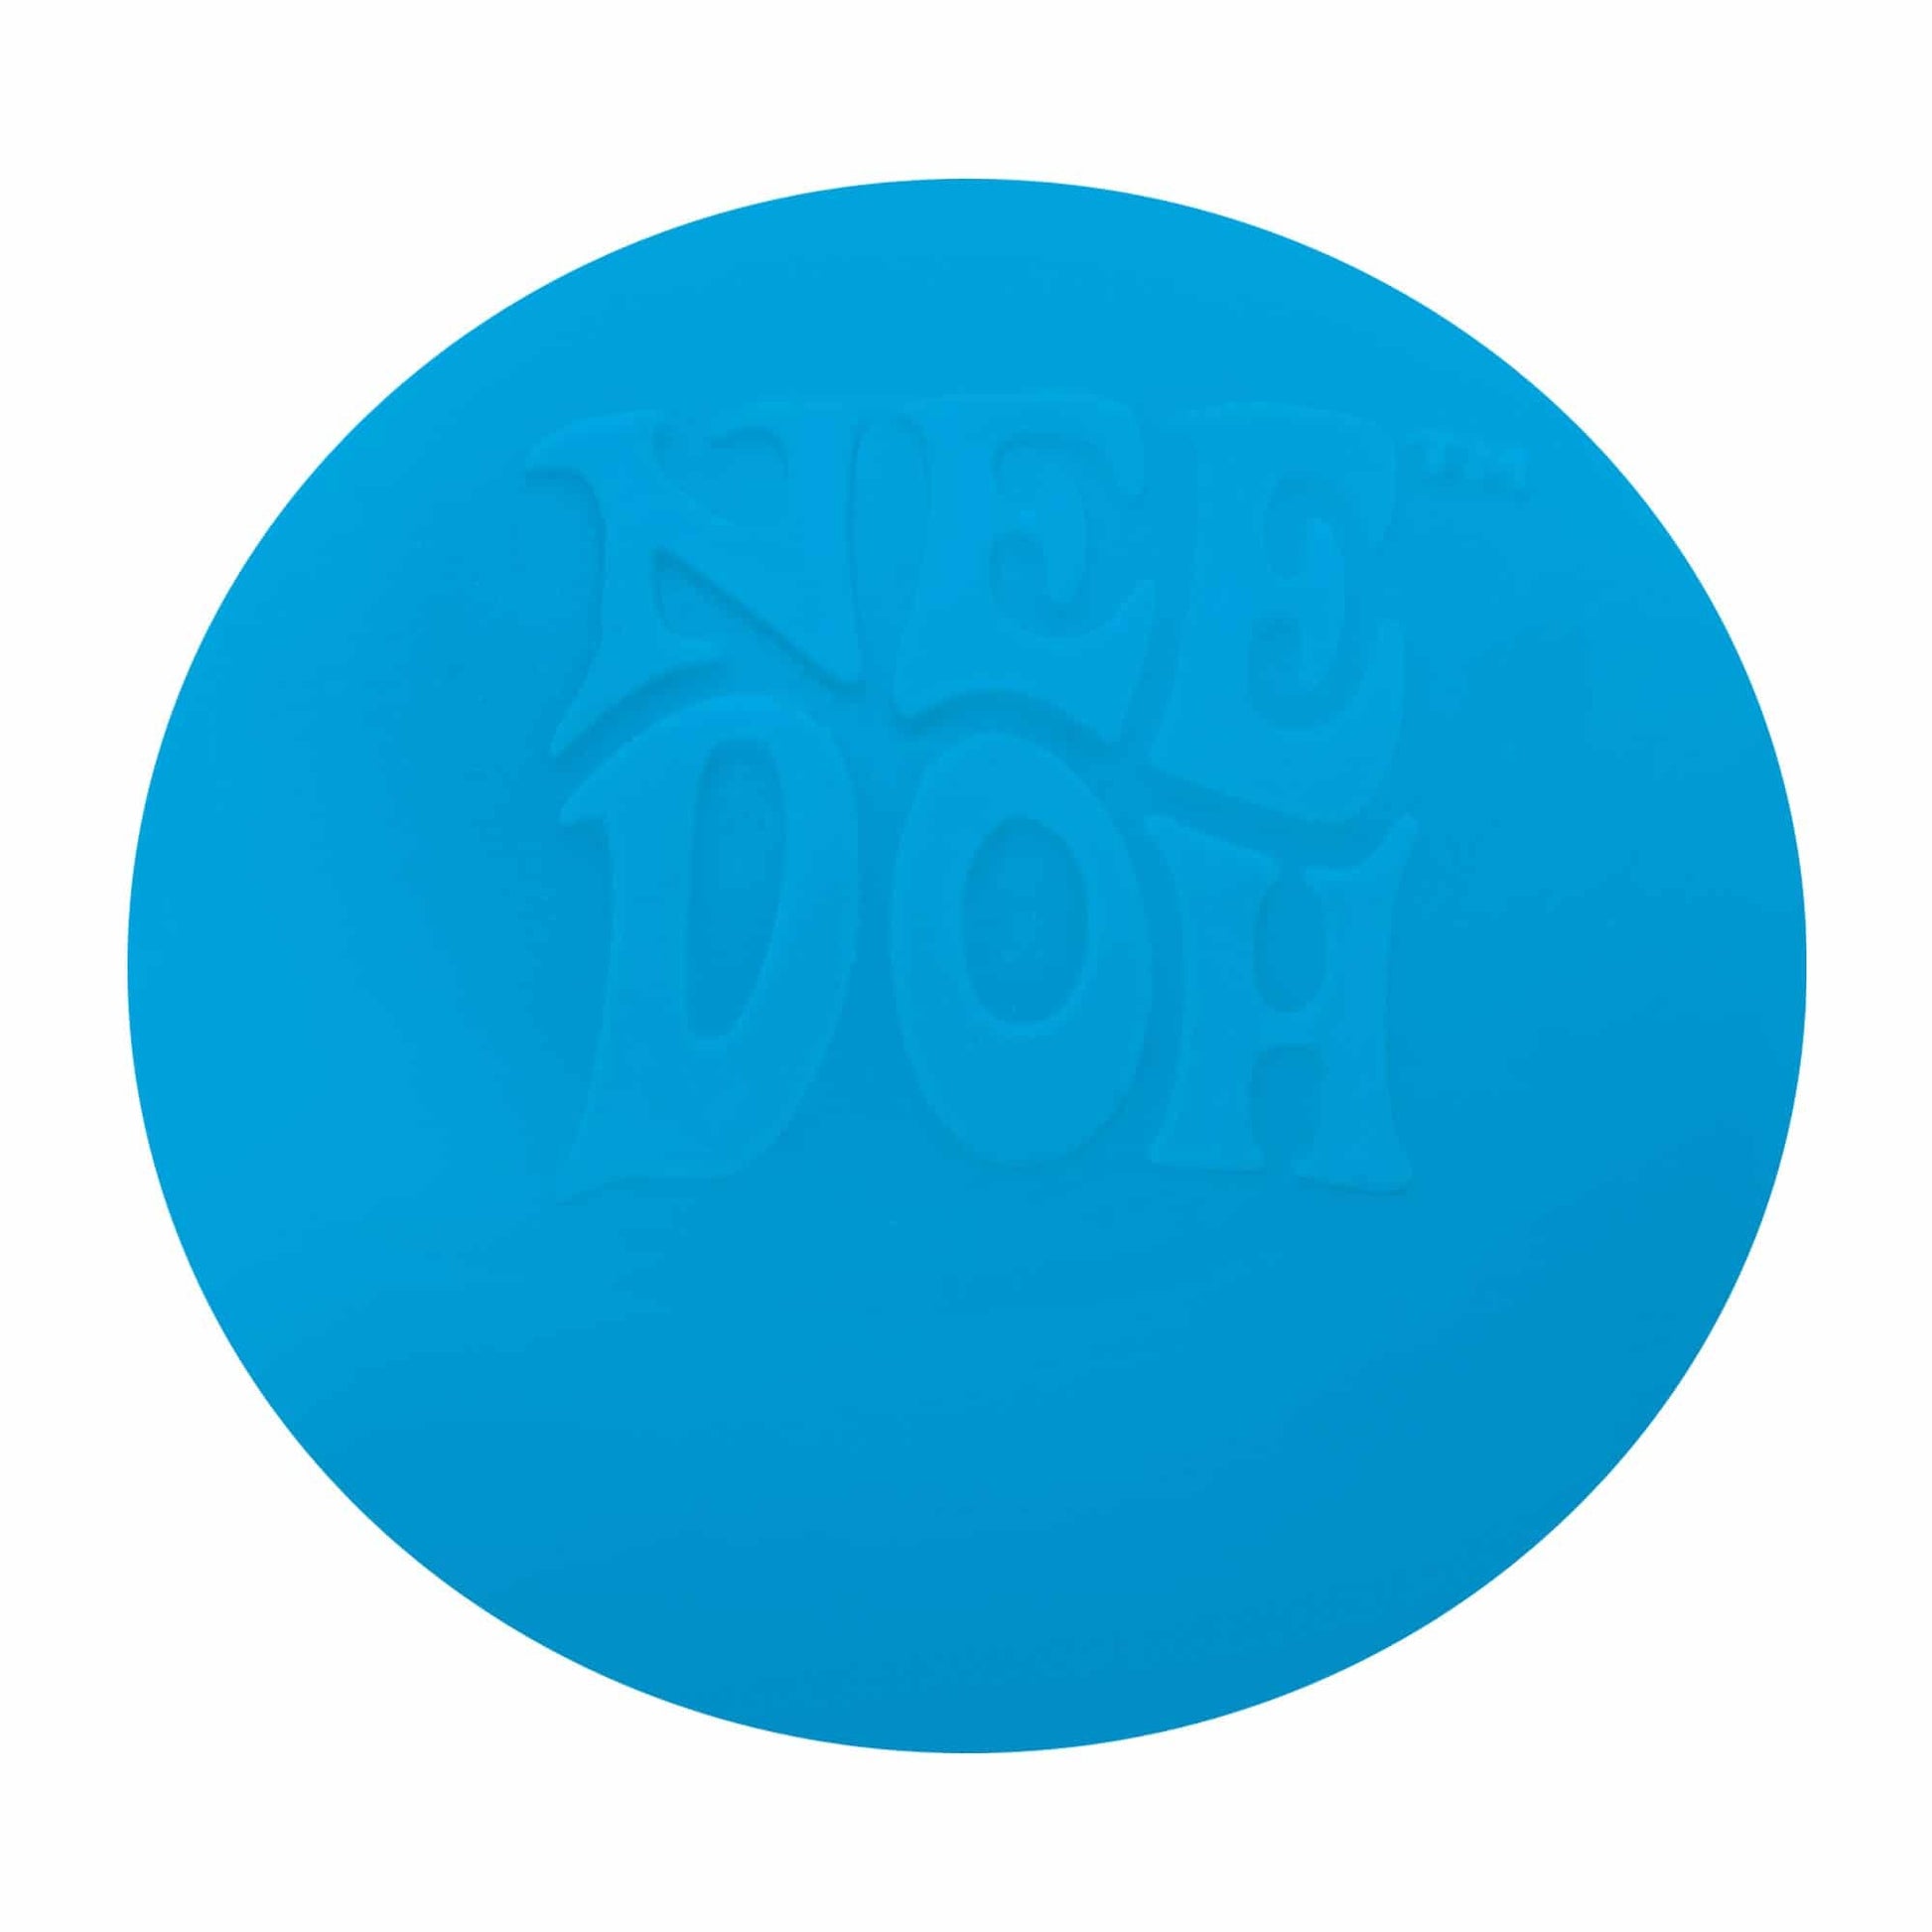 Schylling NeeDoh Stress Ball - Blue